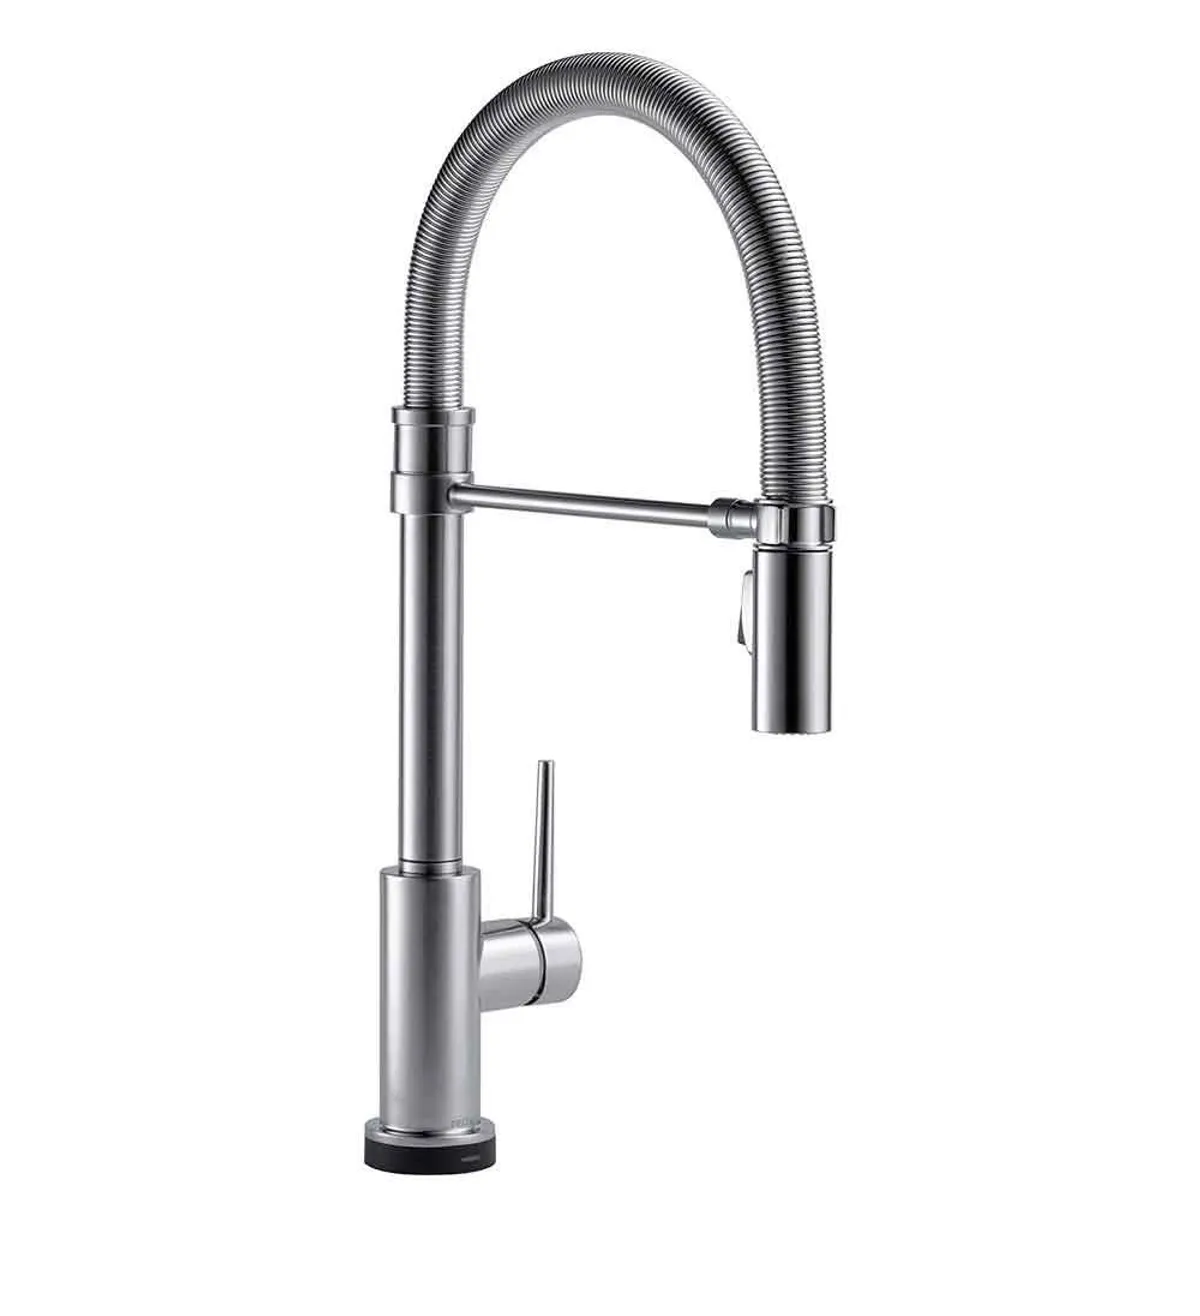 Trinsic Pro 9659 DST Commercial Style Kitchen Faucet Review